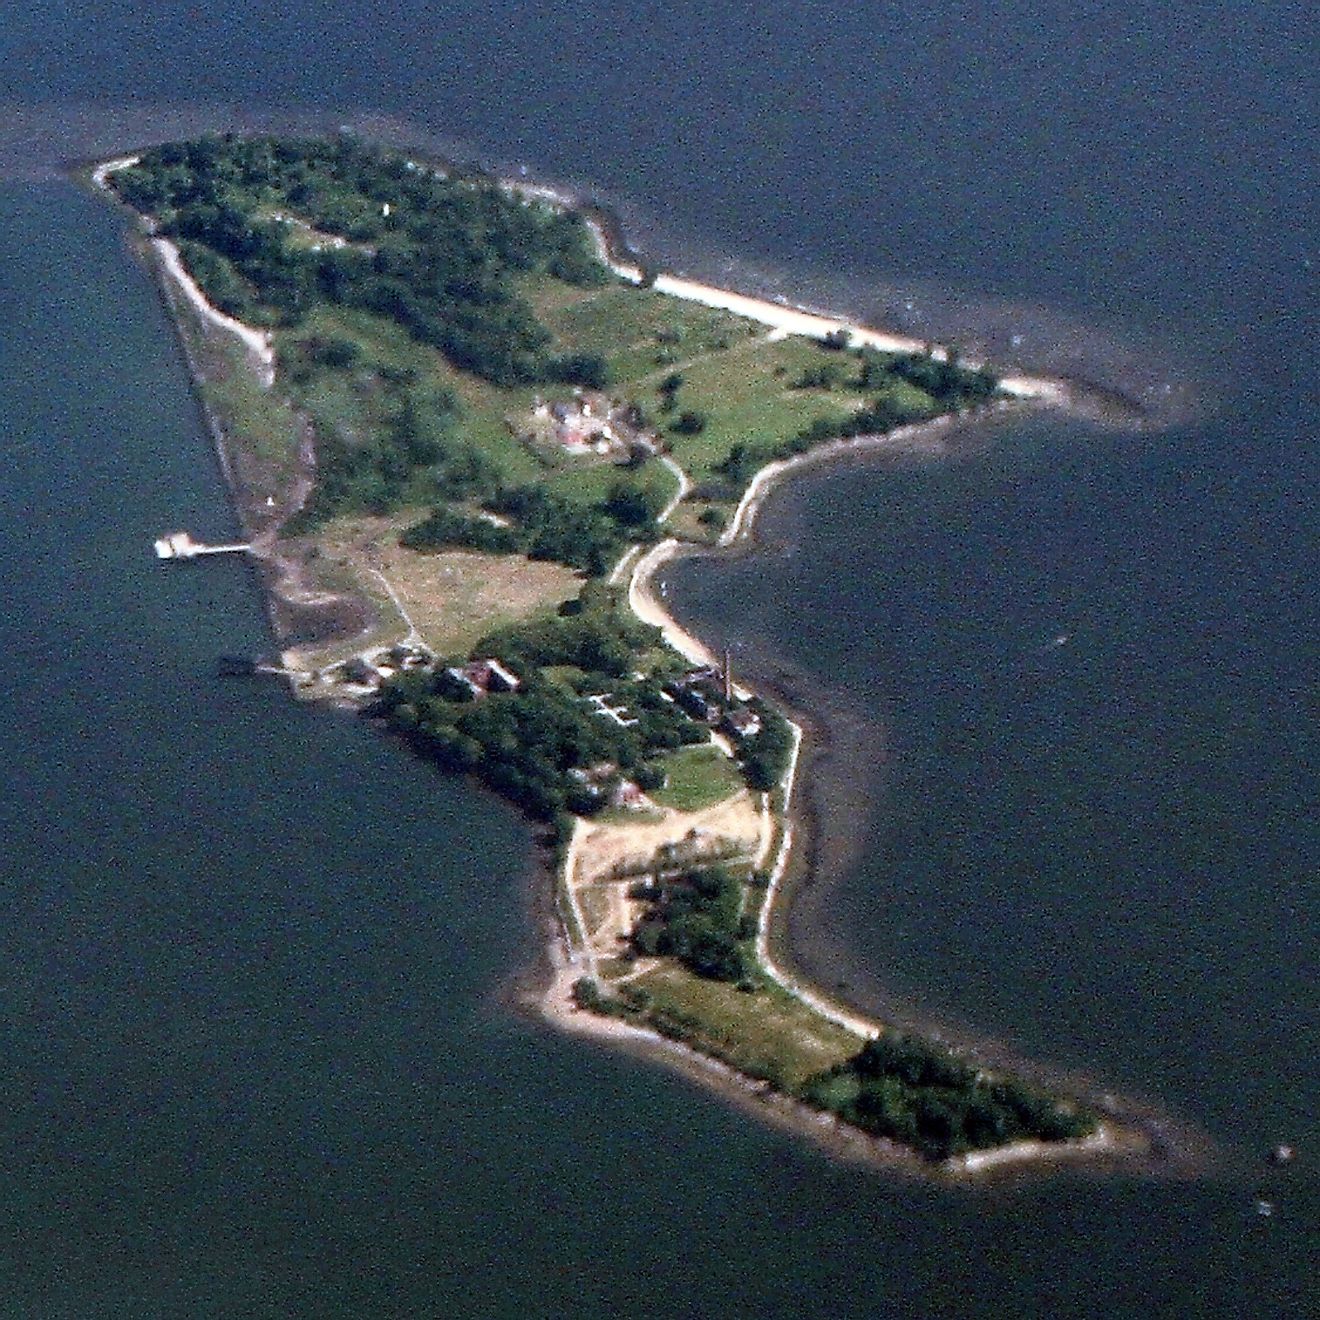 Aerial view of Hart Island. Image credit: Bjoertvedt/Wikimedia.org